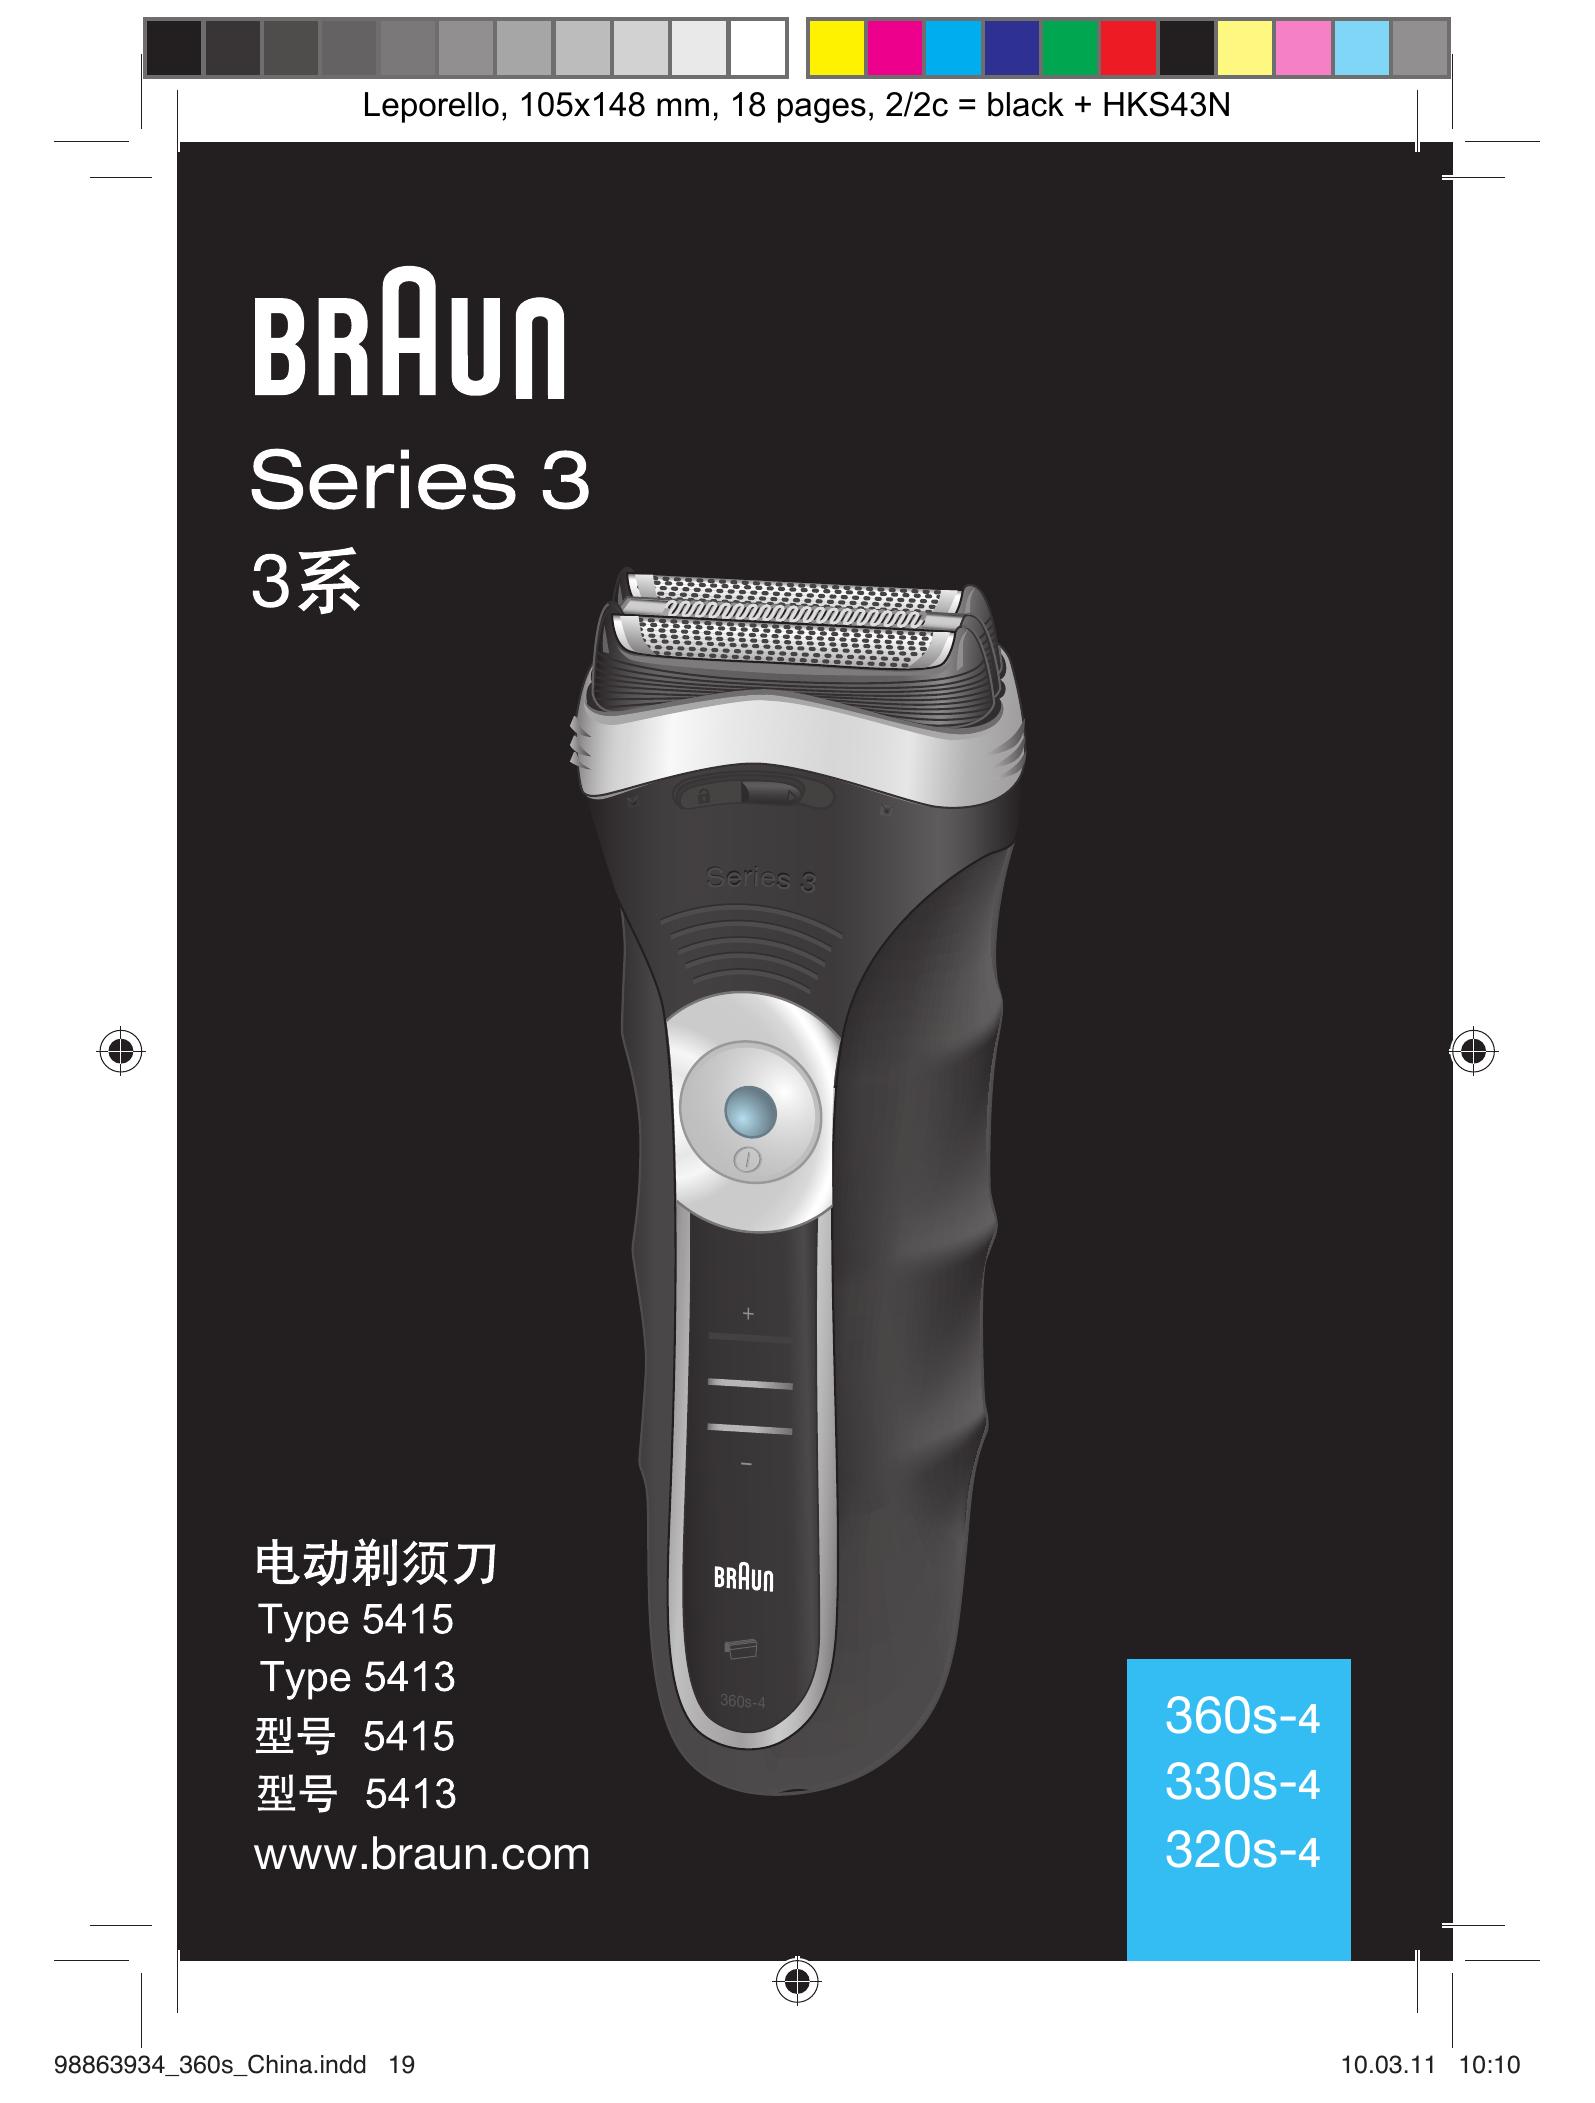 Braun 330S-4 Electric Shaver User Manual